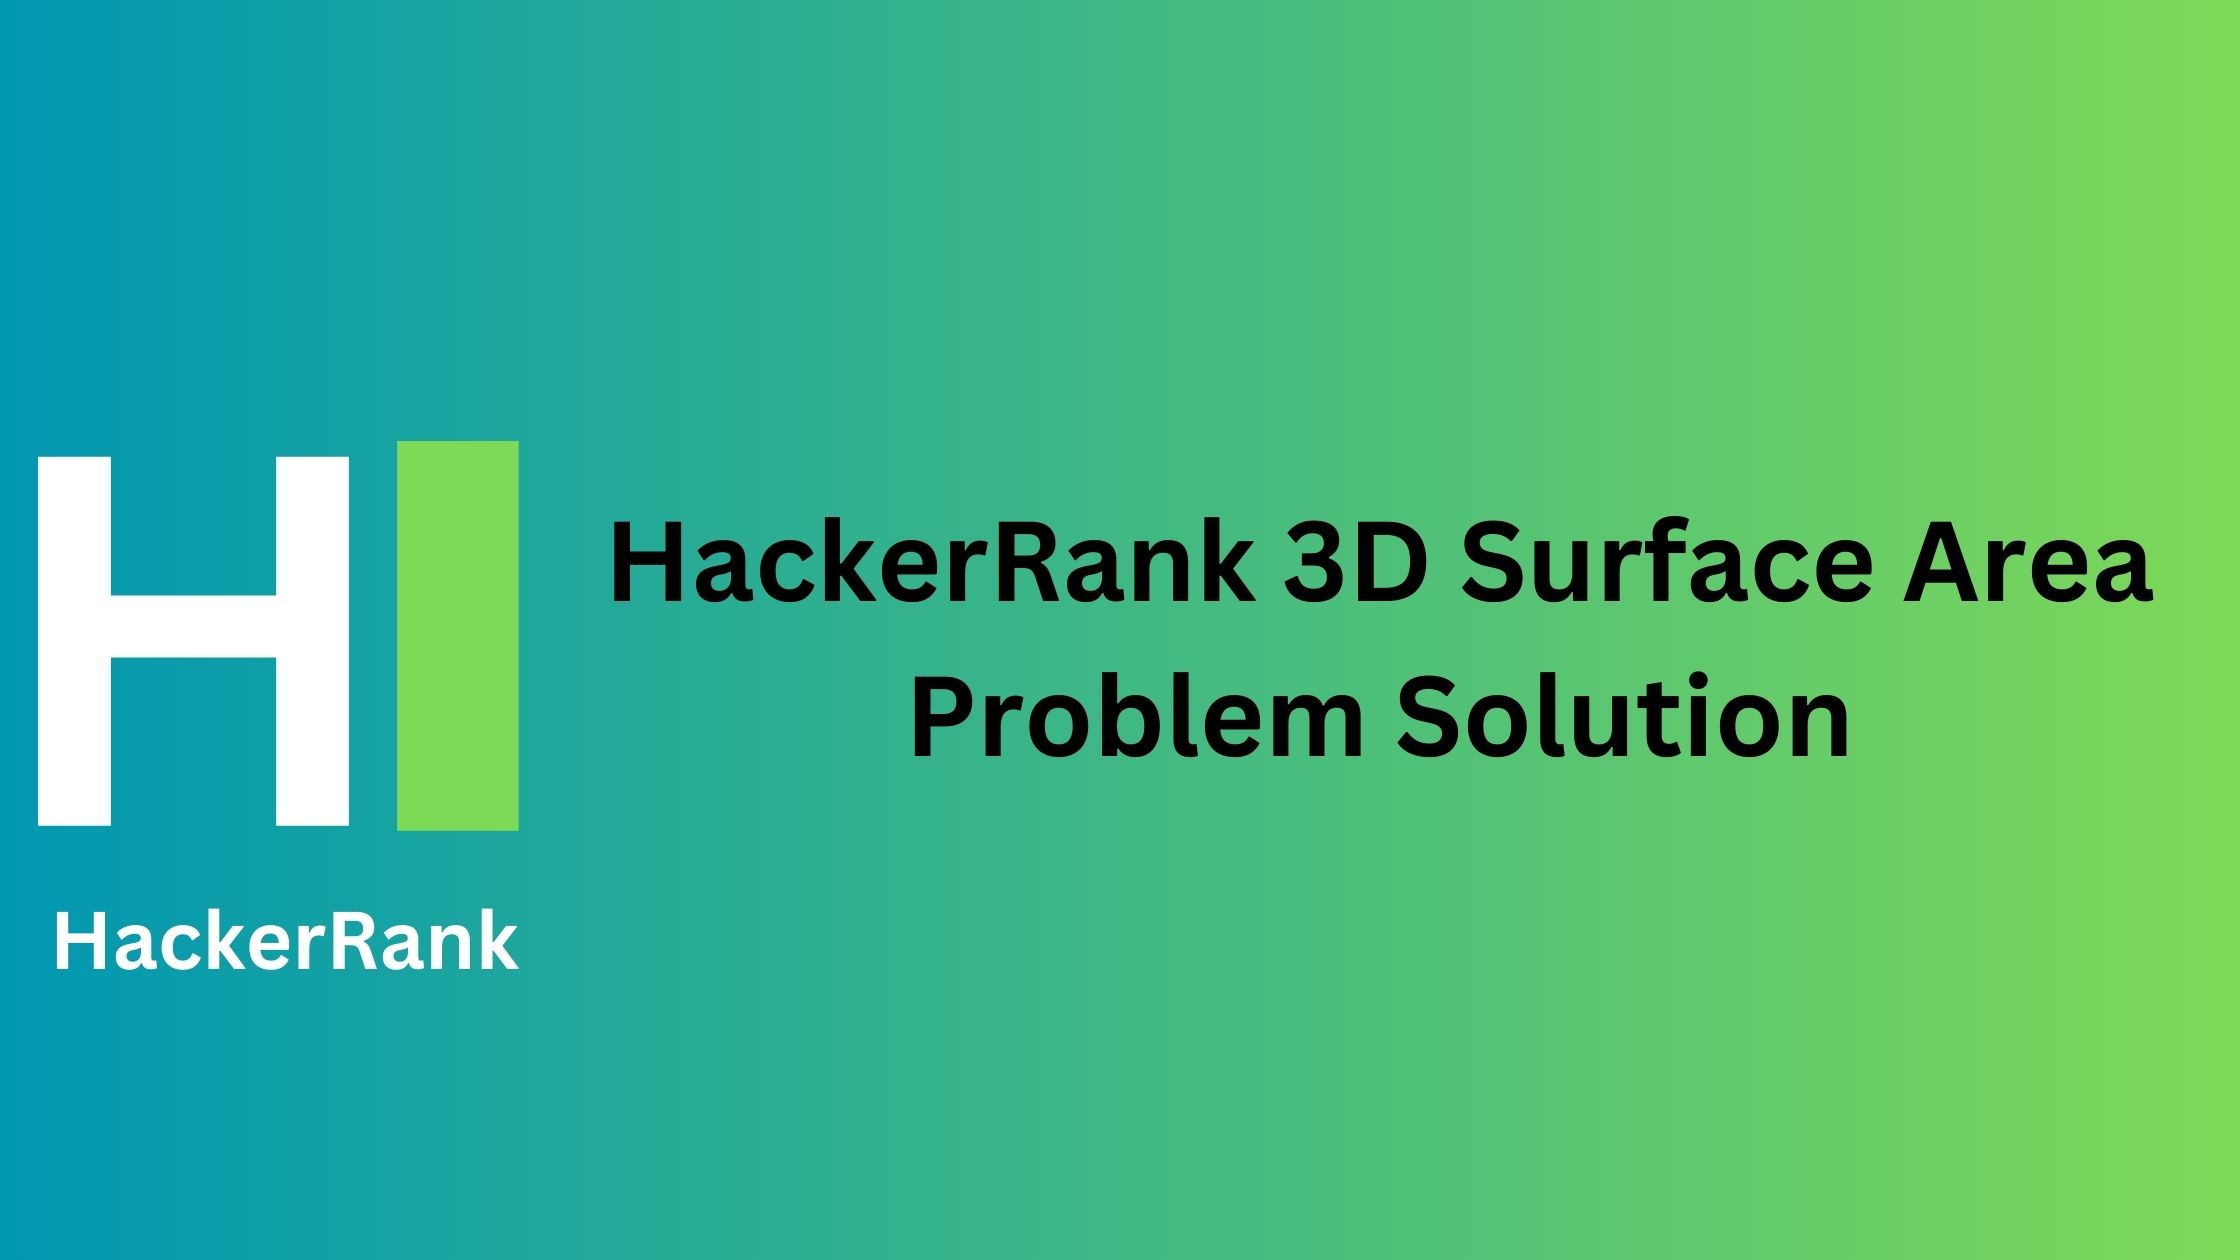 HackerRank 3D Surface Area Problem Solution